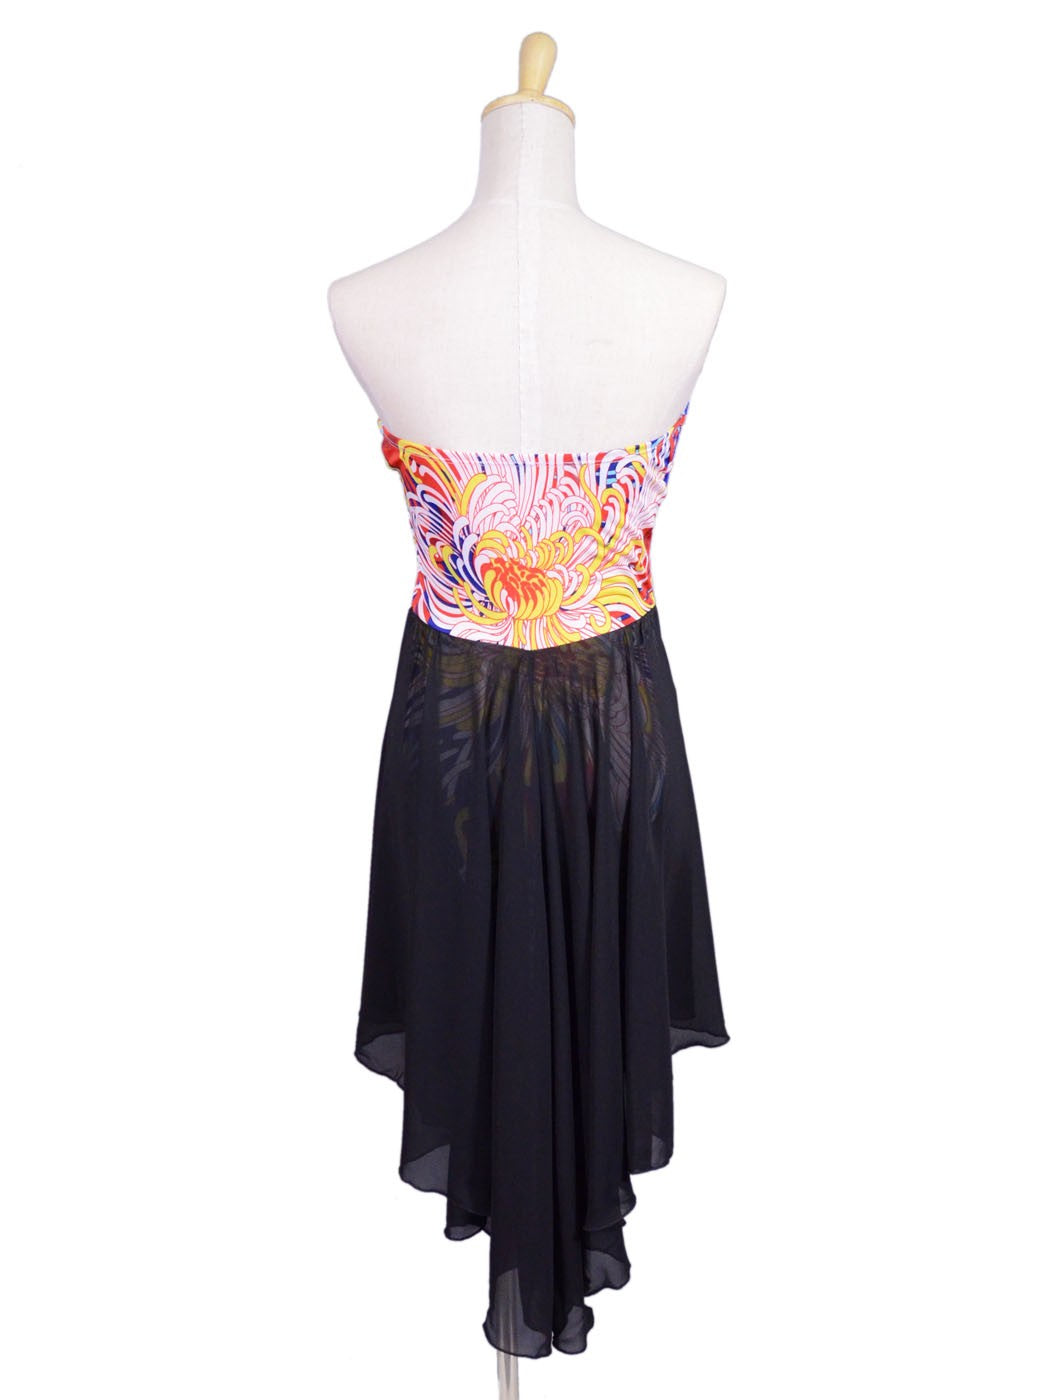 Trendology Sexy Glam Abstract Print Hi-Lo Chiffon Tube Bodycon Knit Dress